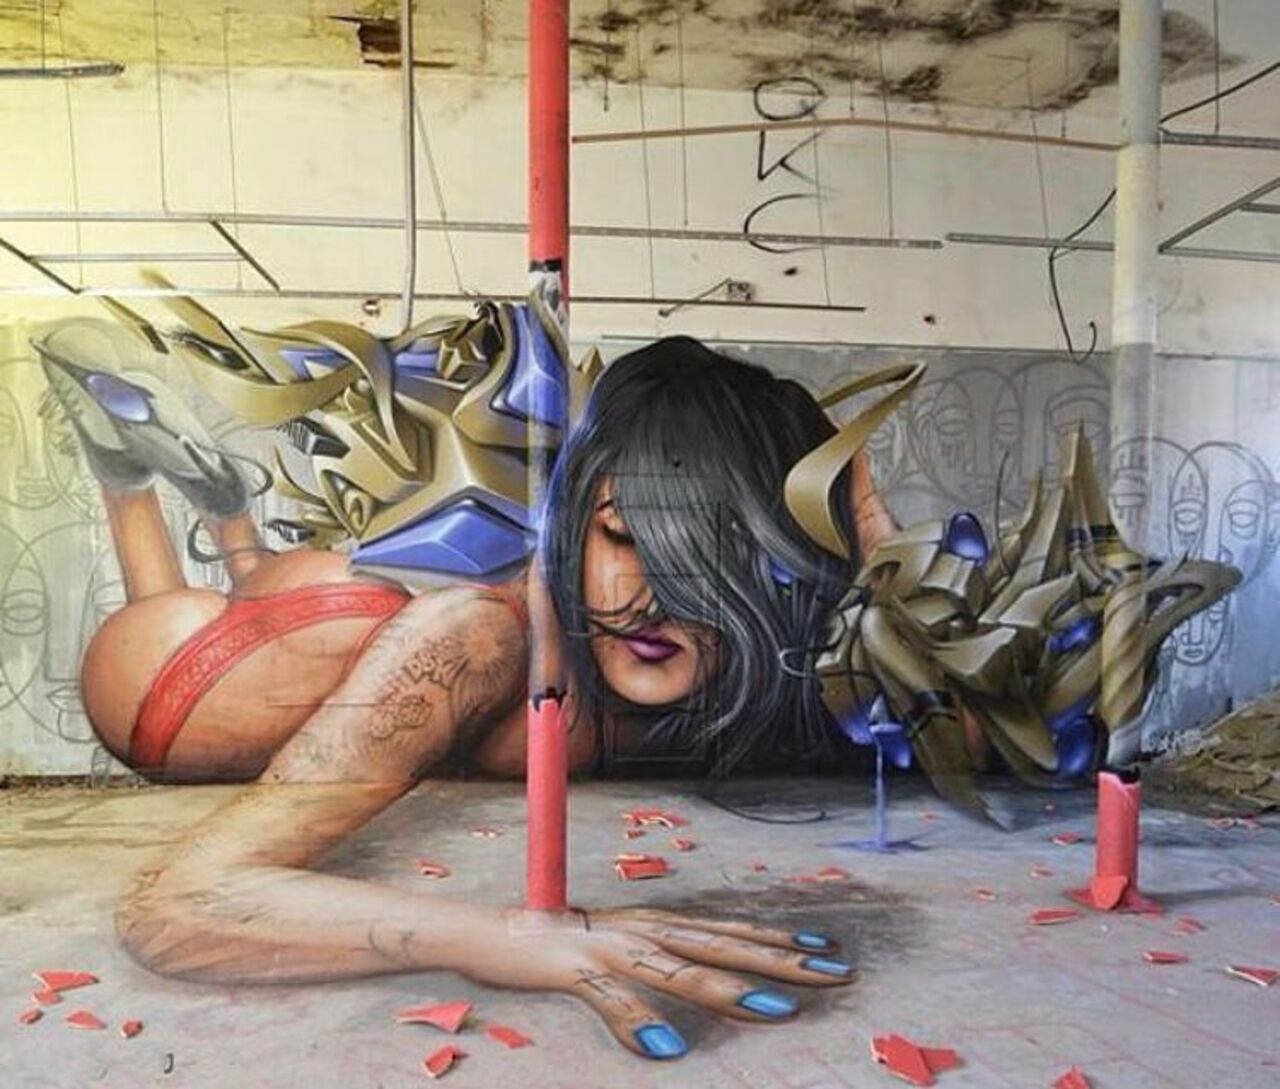 New work by Jeaze Oner #streetart #mural #graffiti #art https://t.co/QAz1iYJdy7